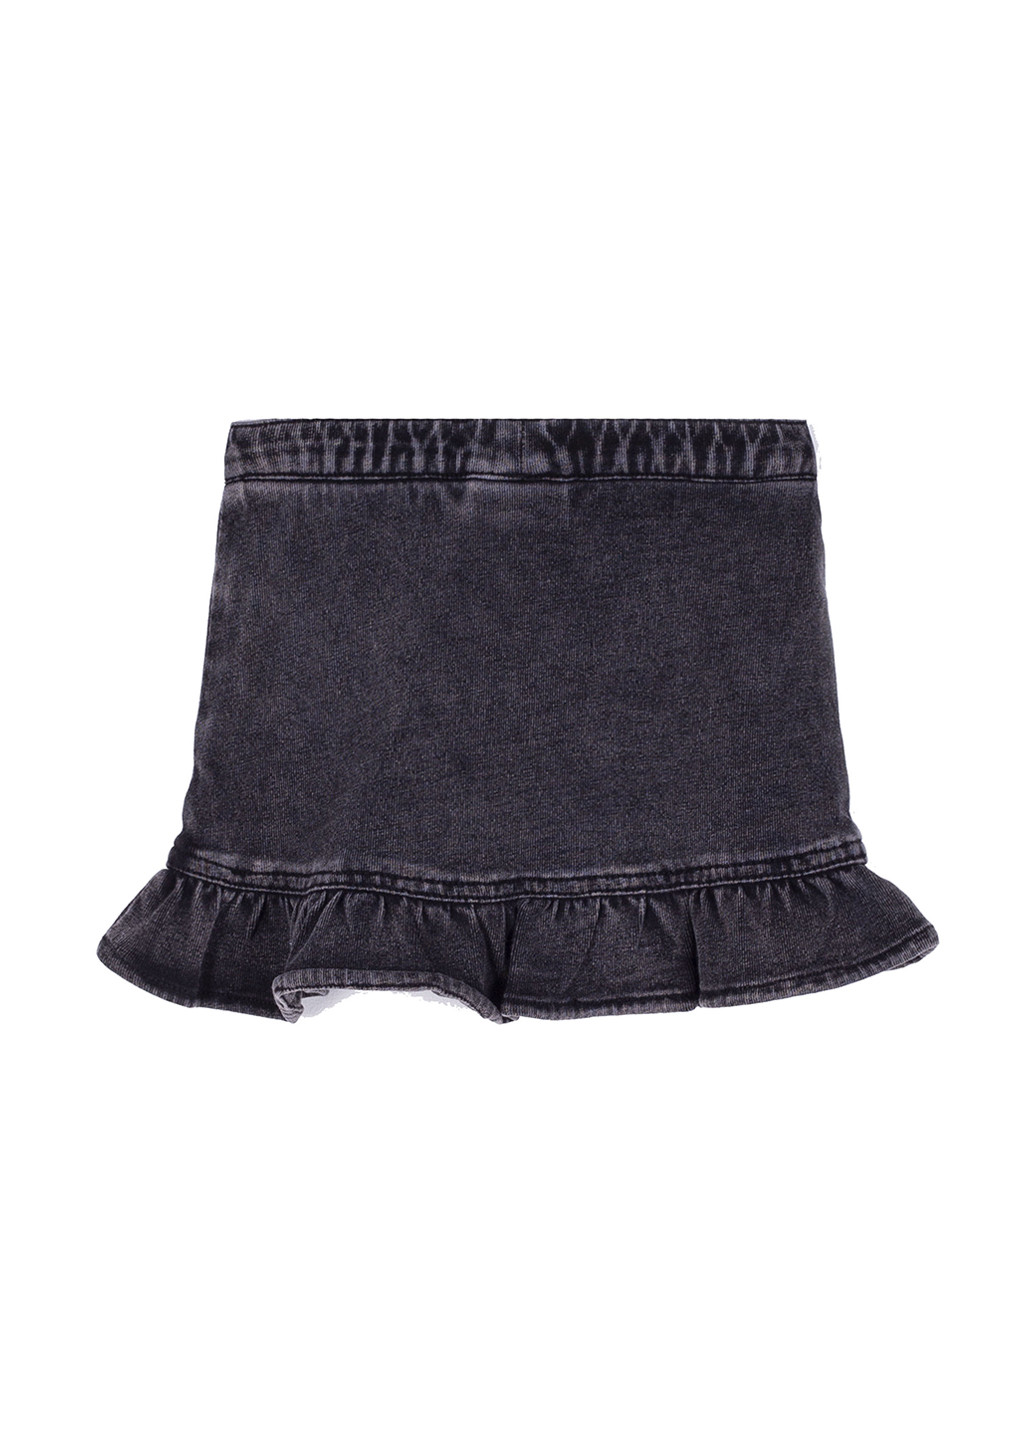 Темно-серая кэжуал однотонная юбка Coccodrillo на запах